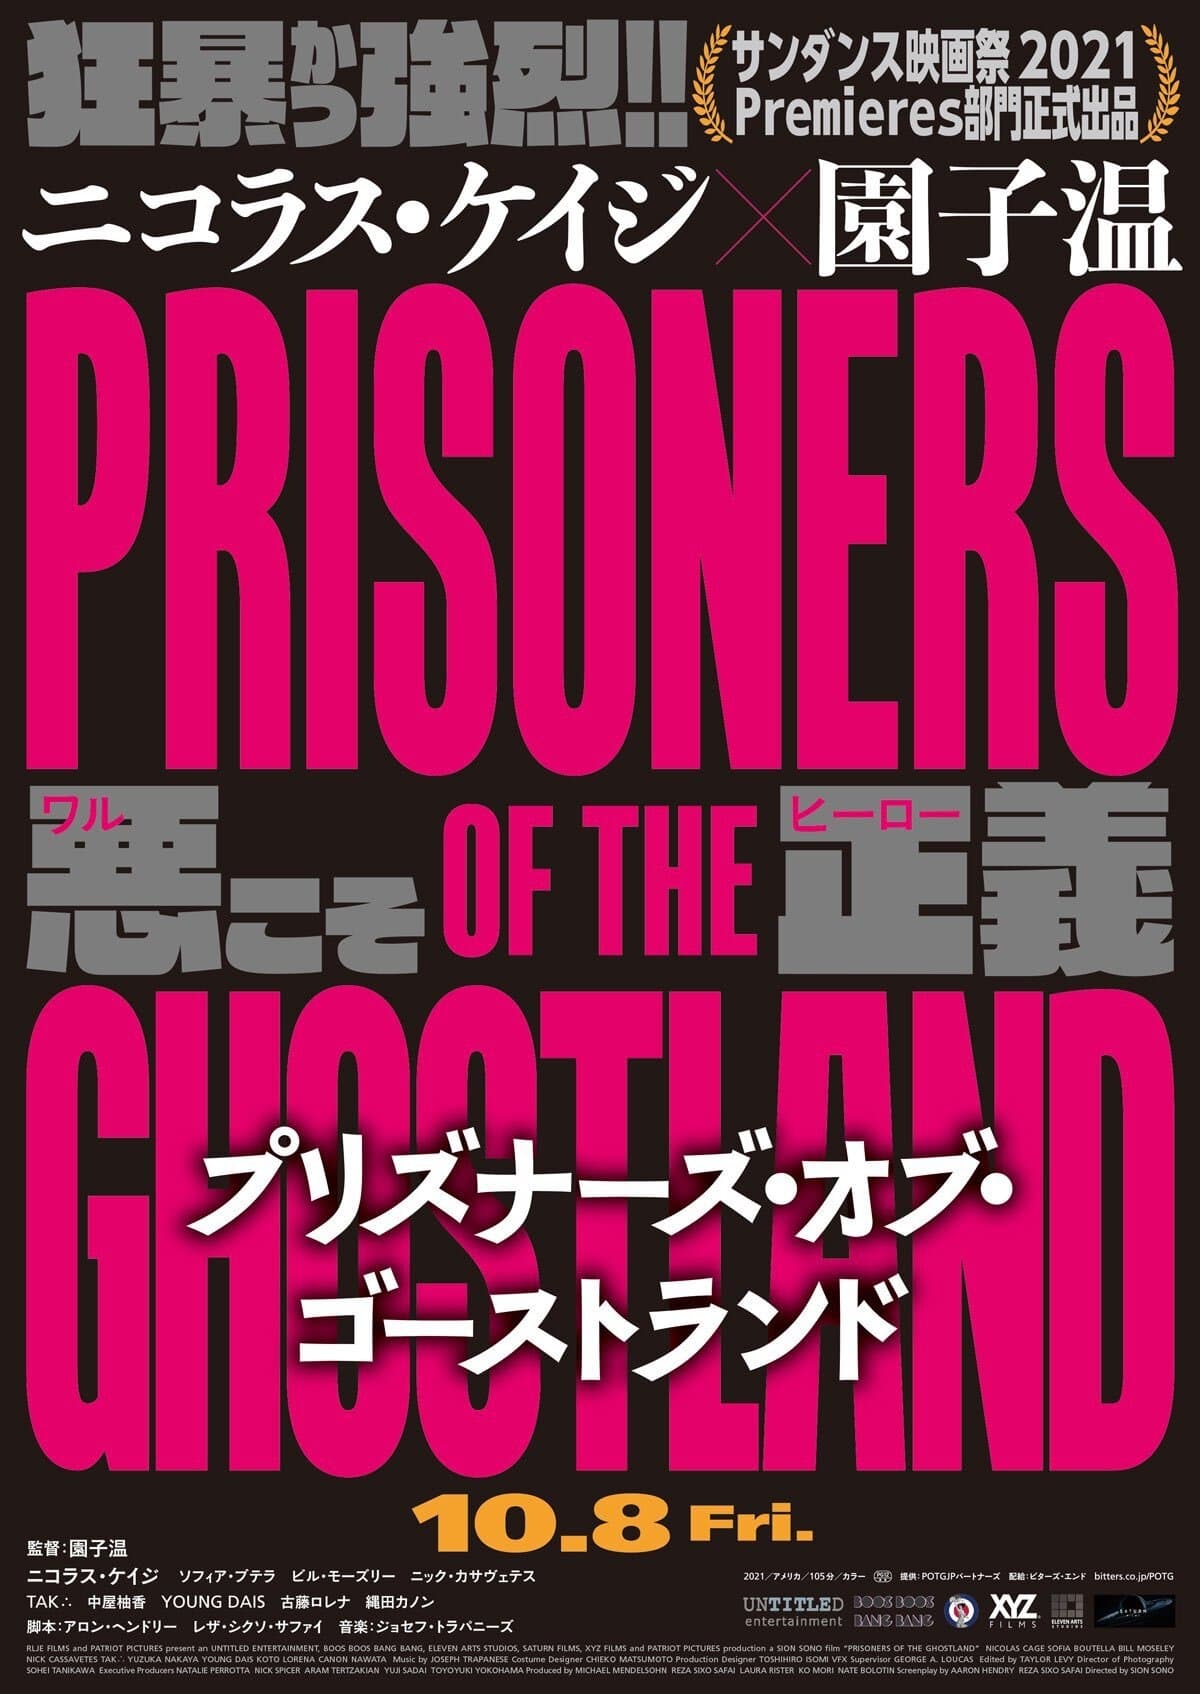 Prisoners of the Ghostland